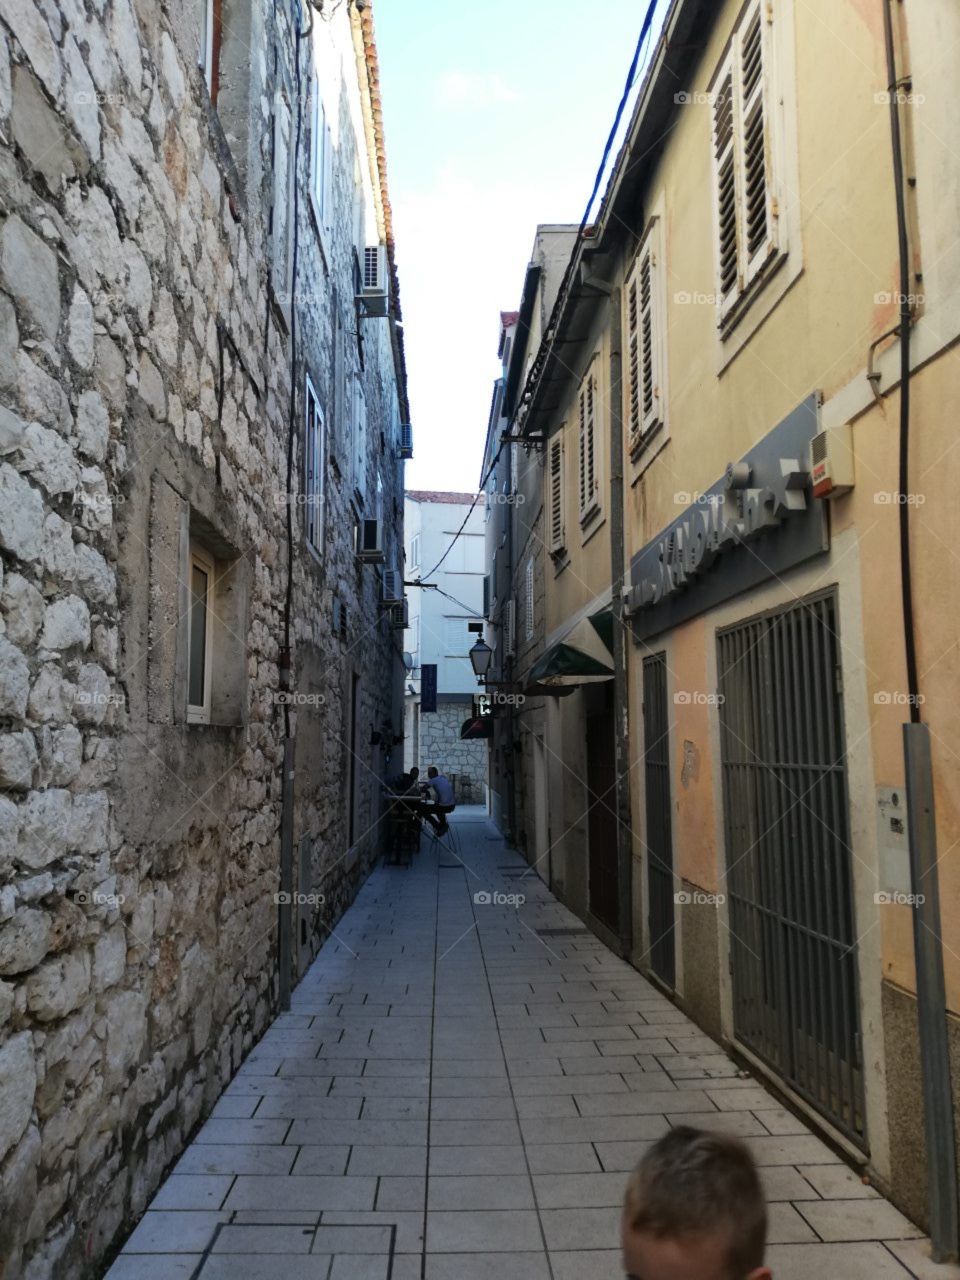 Little street